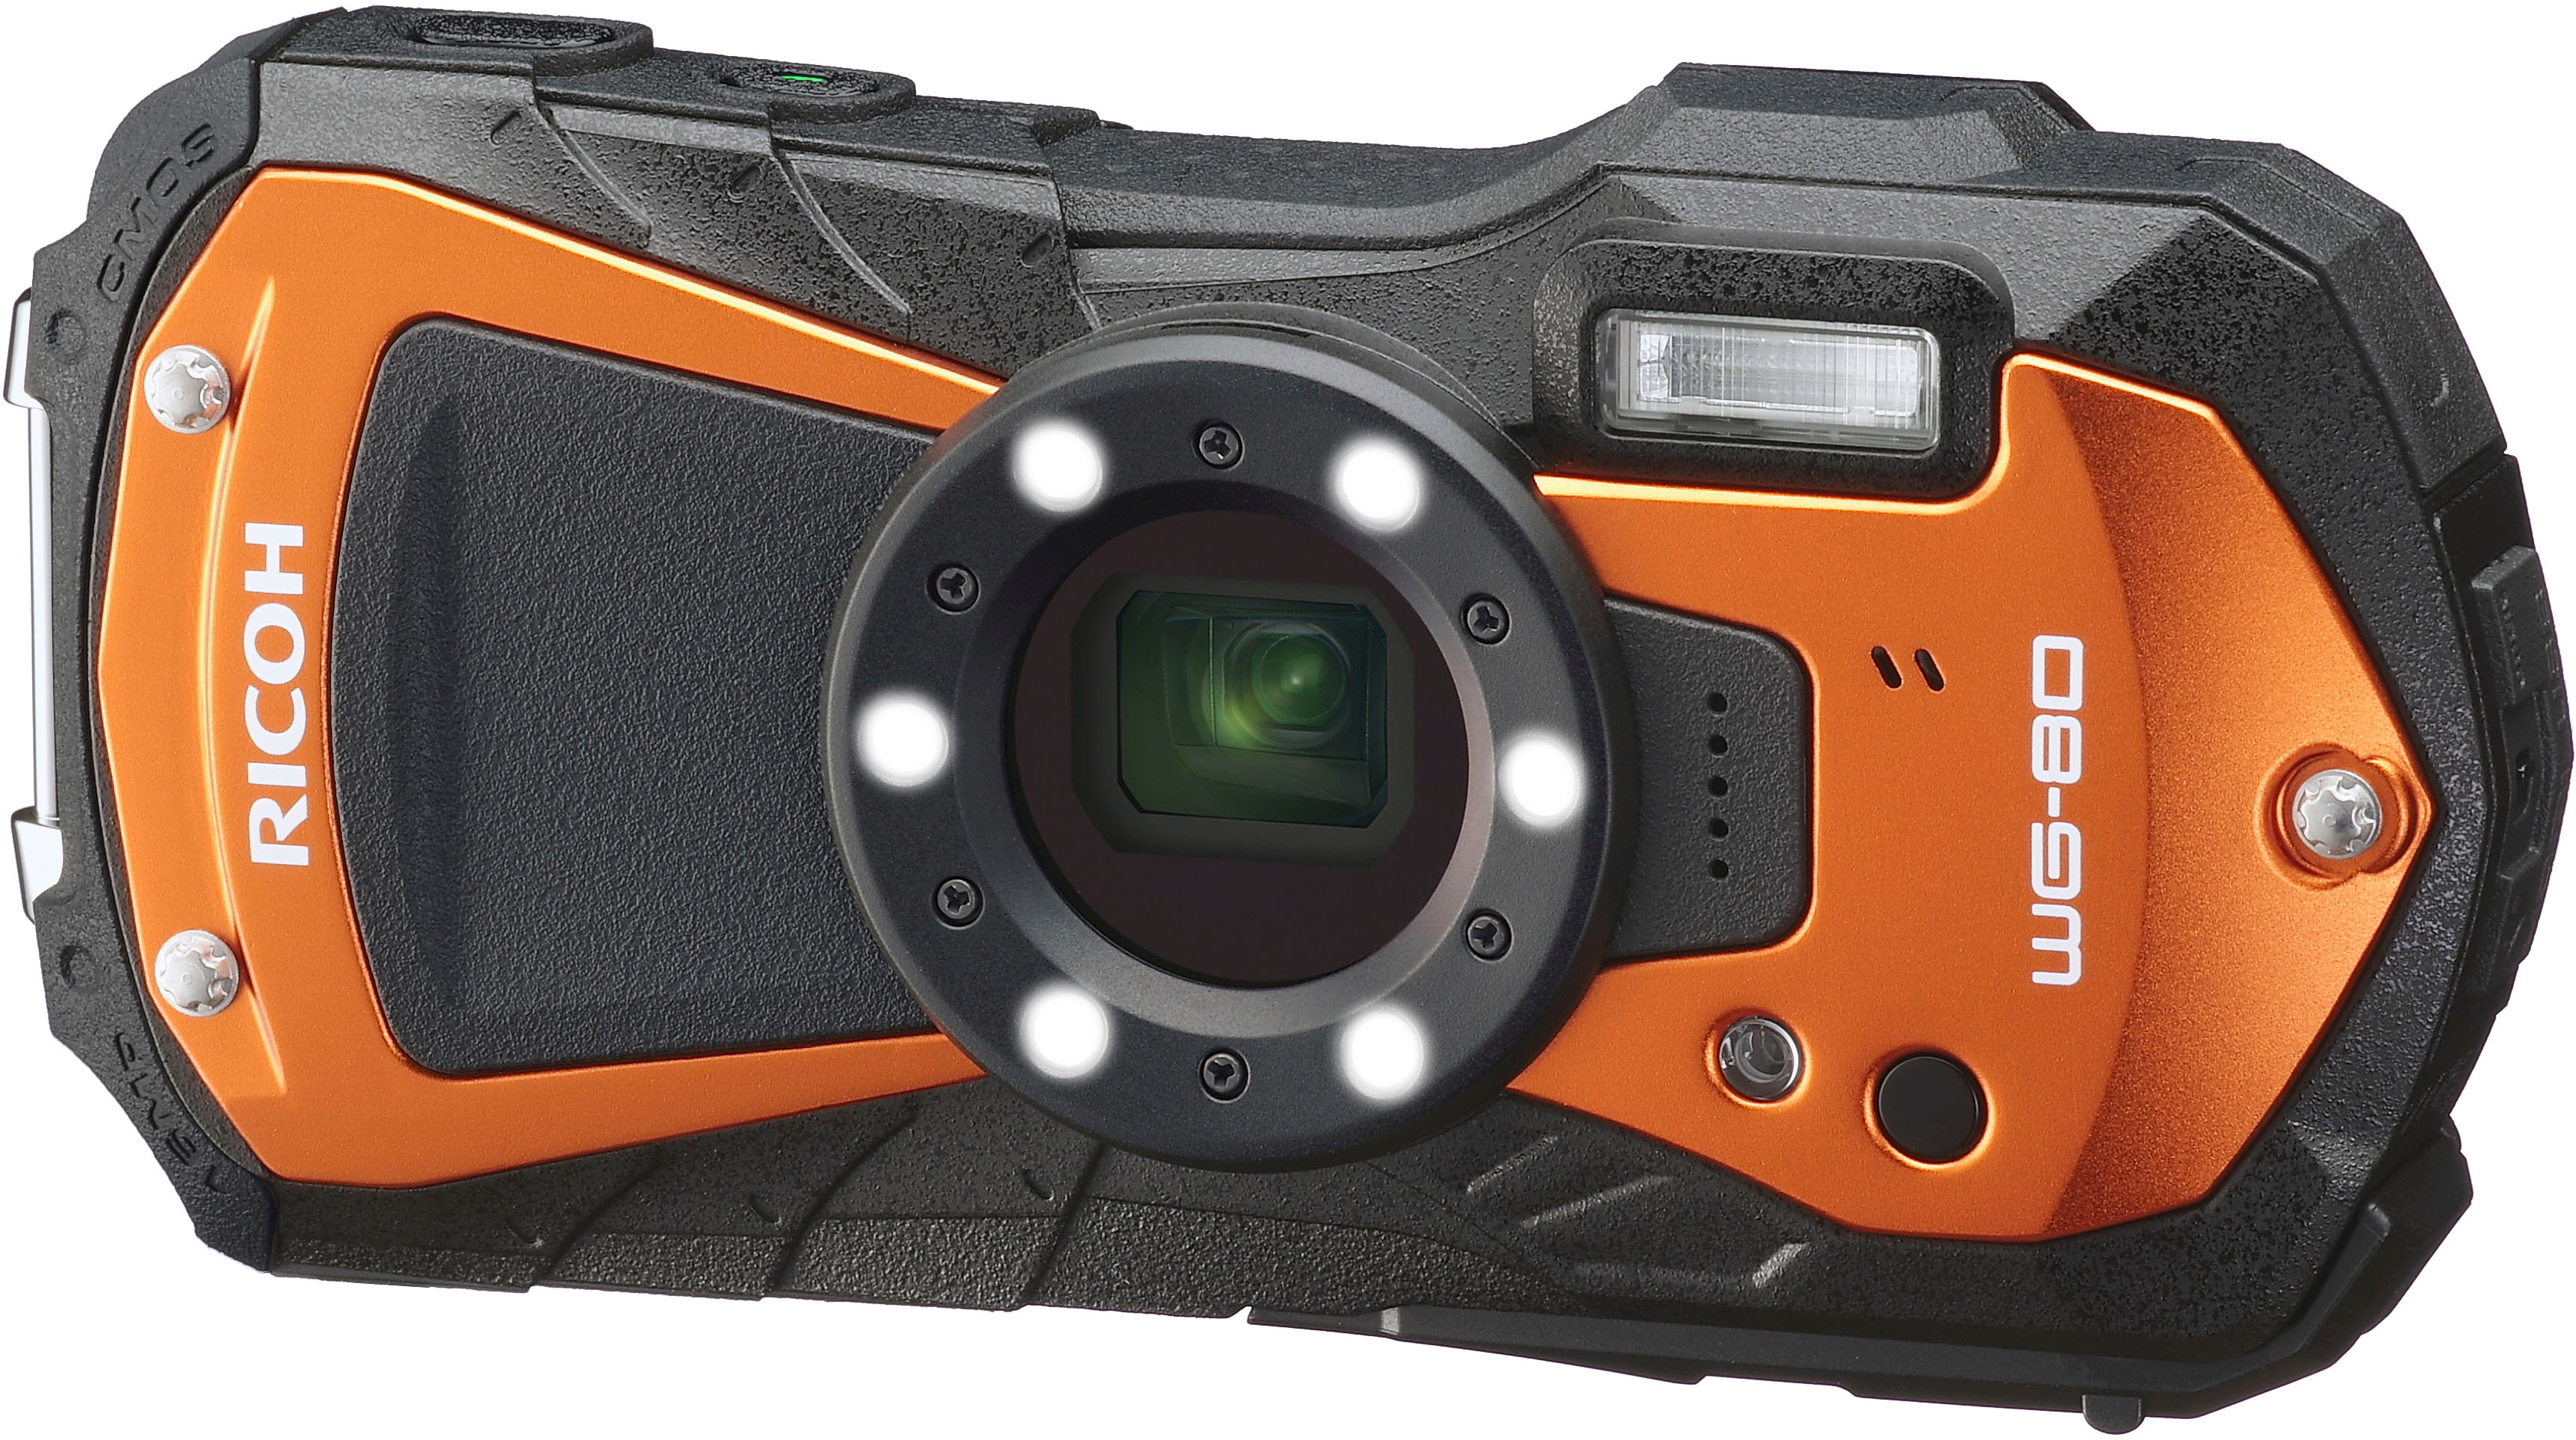 Angle View: Ricoh - WG-80 16.0 Megapixel Waterproof Digital Camera - Orange